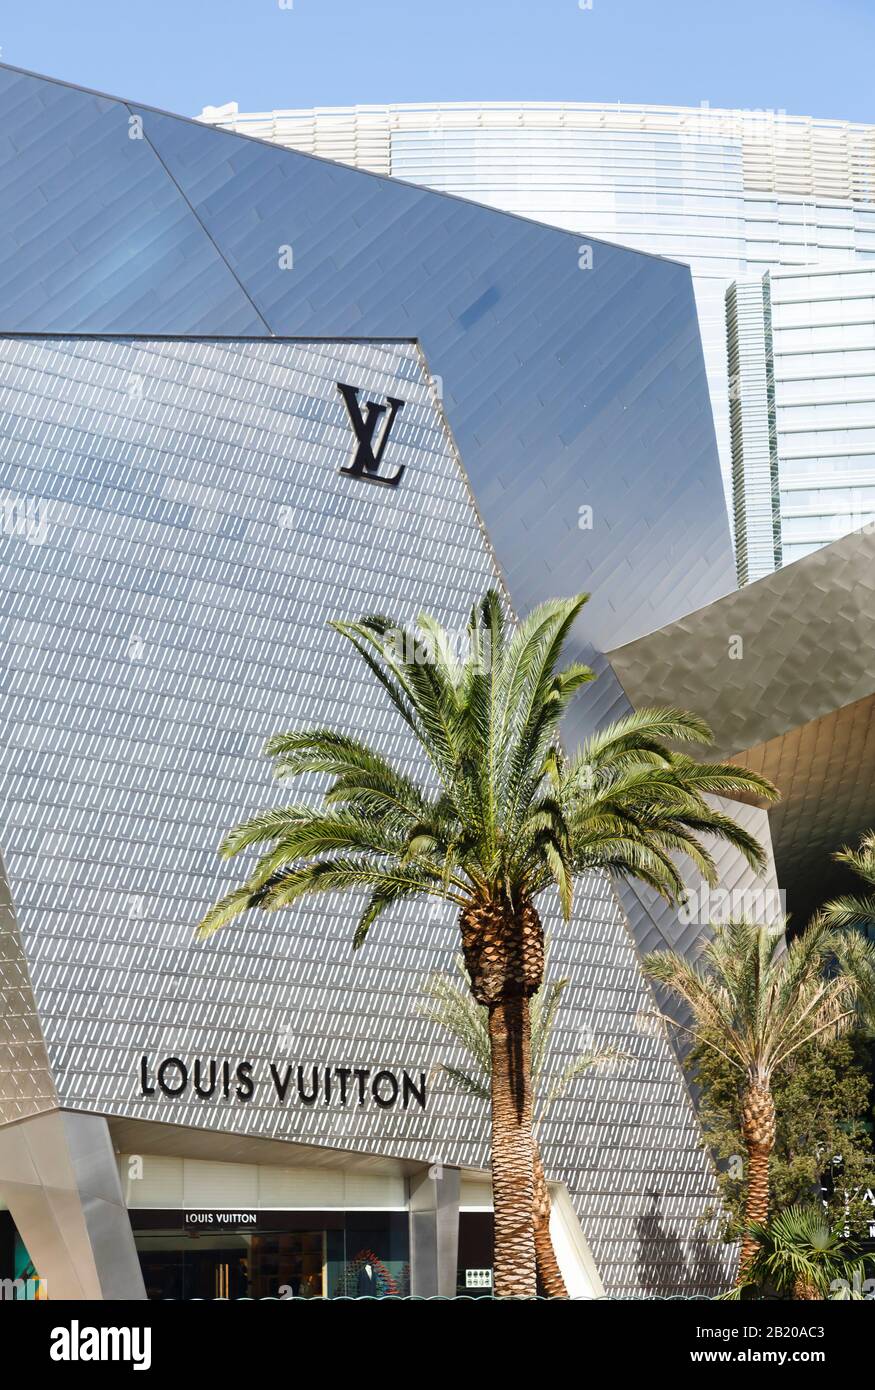 LAS VEGAS, NEVADA - May 17, 2012. Louis Vuitton Store at Crystals, CityCenter, Las Vegas Stock Photo